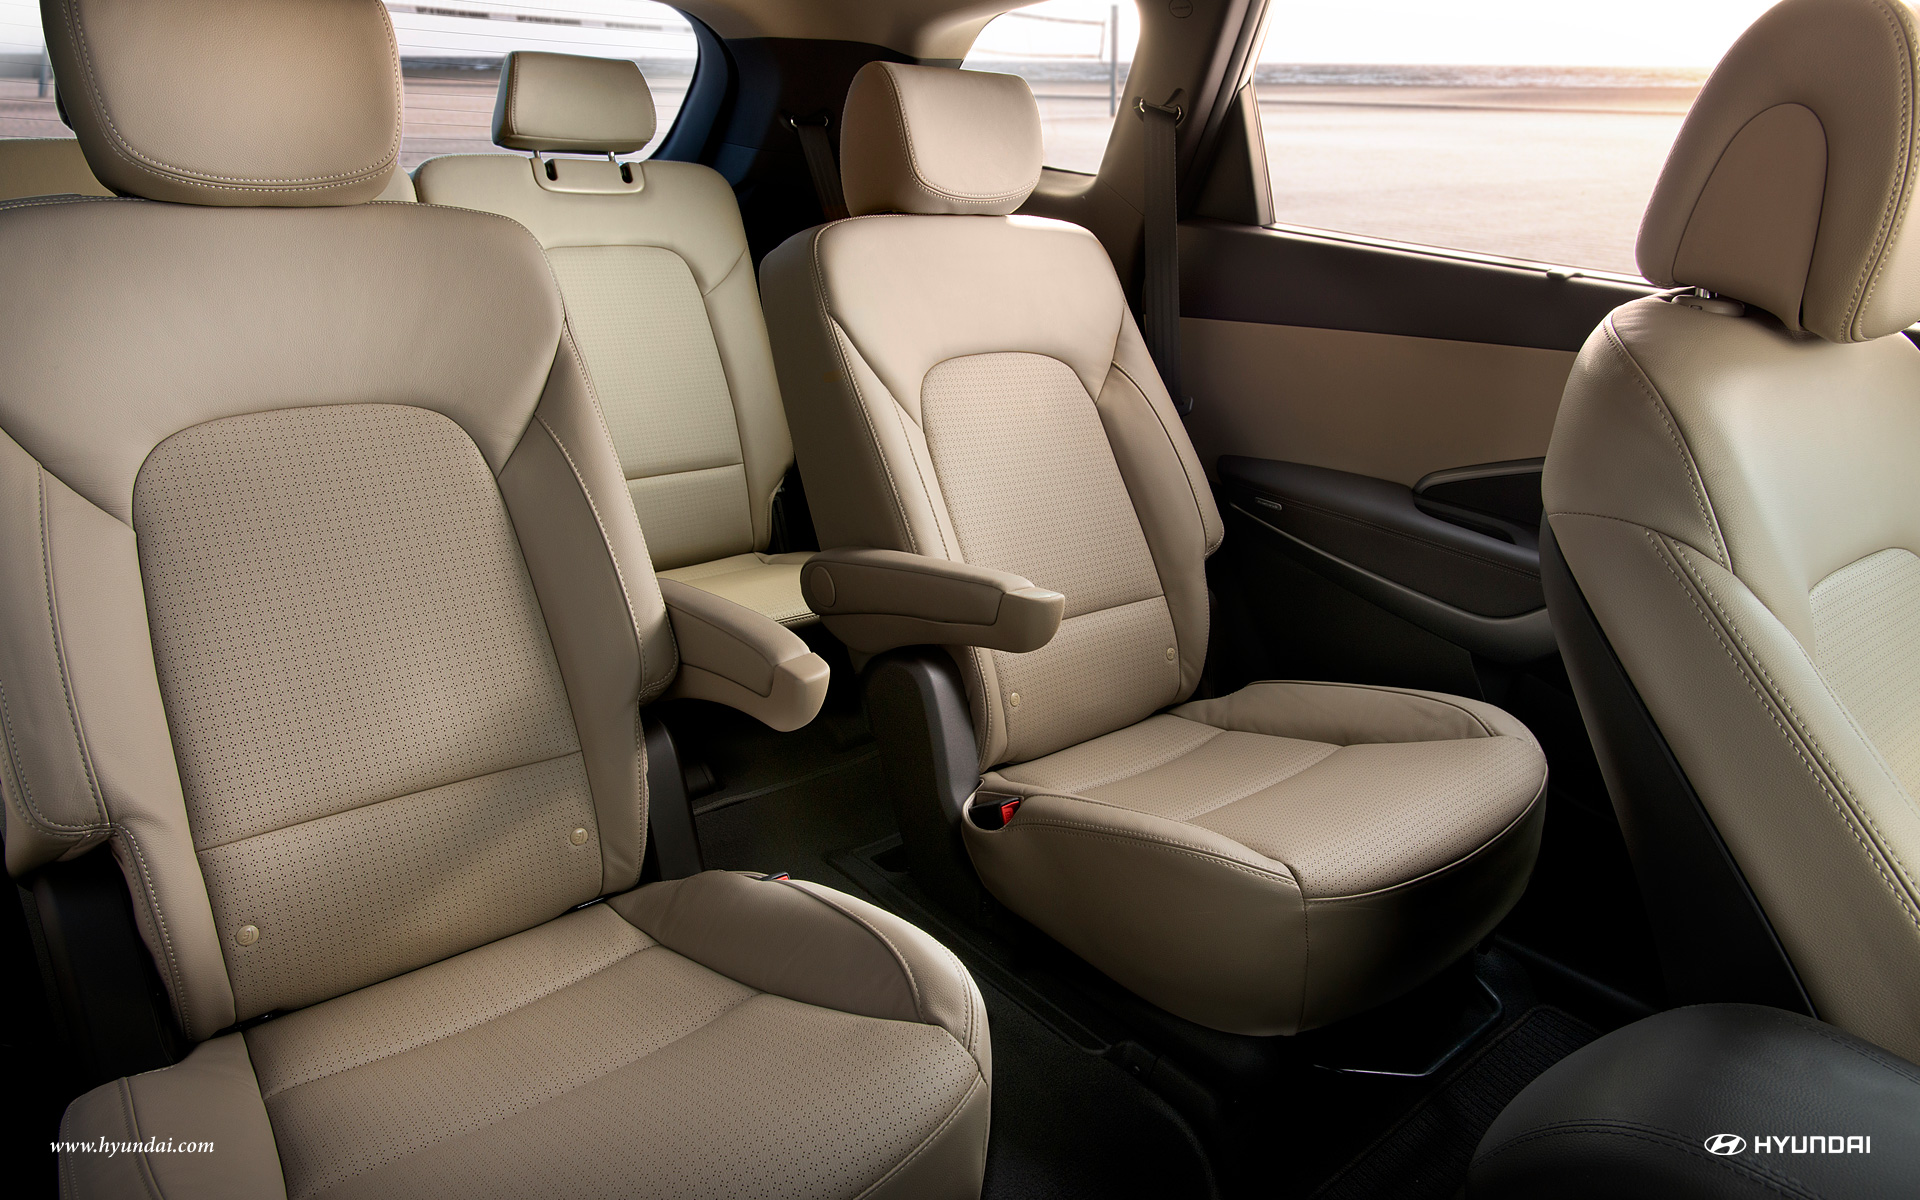 Seven Passenger 2013 Hyundai Santa Fe comes out with Super Bowl Commercial